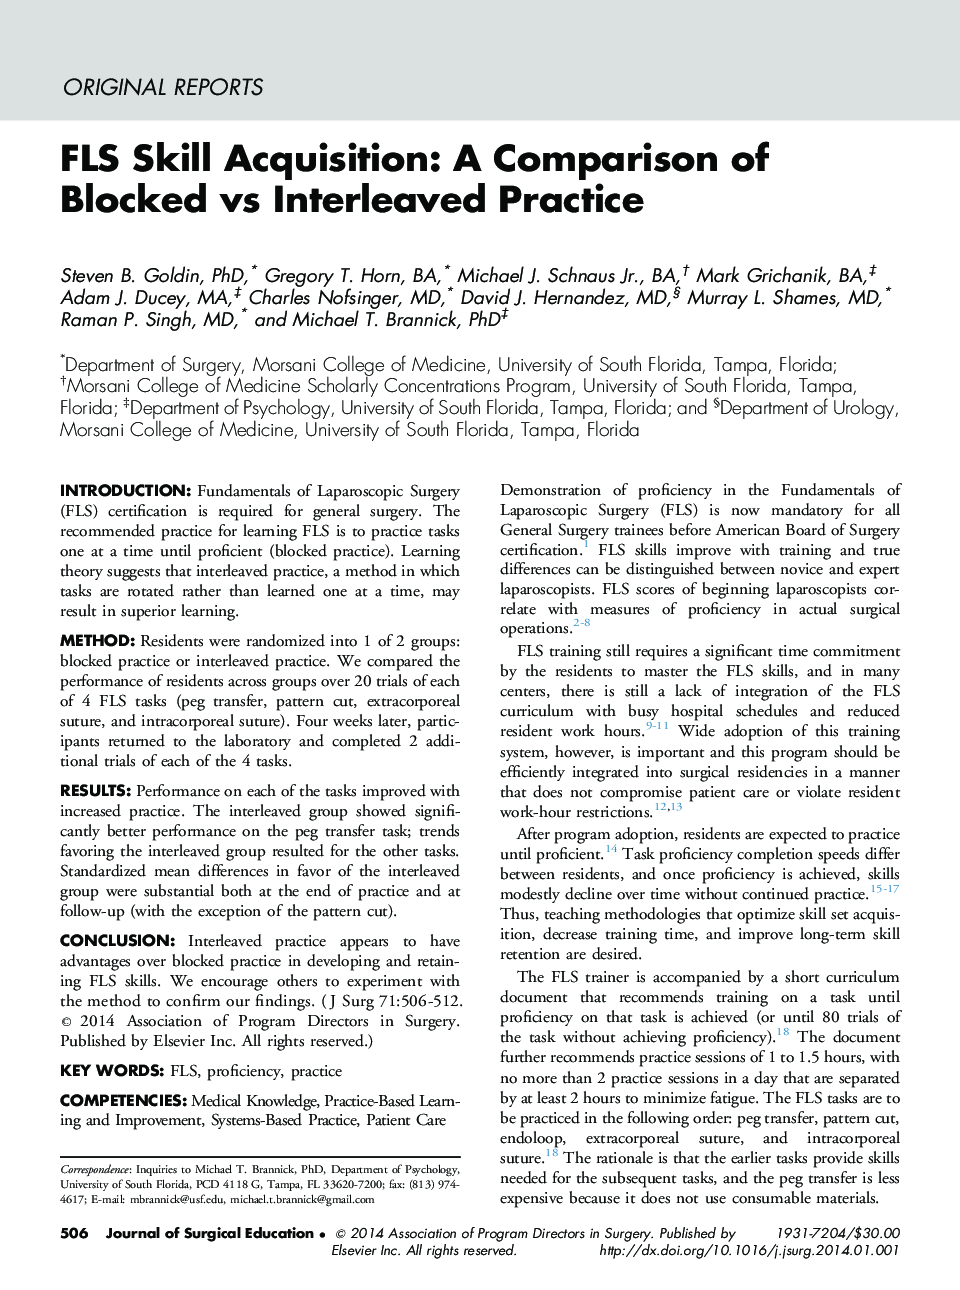 FLS Skill Acquisition: A Comparison of Blocked vs Interleaved Practice